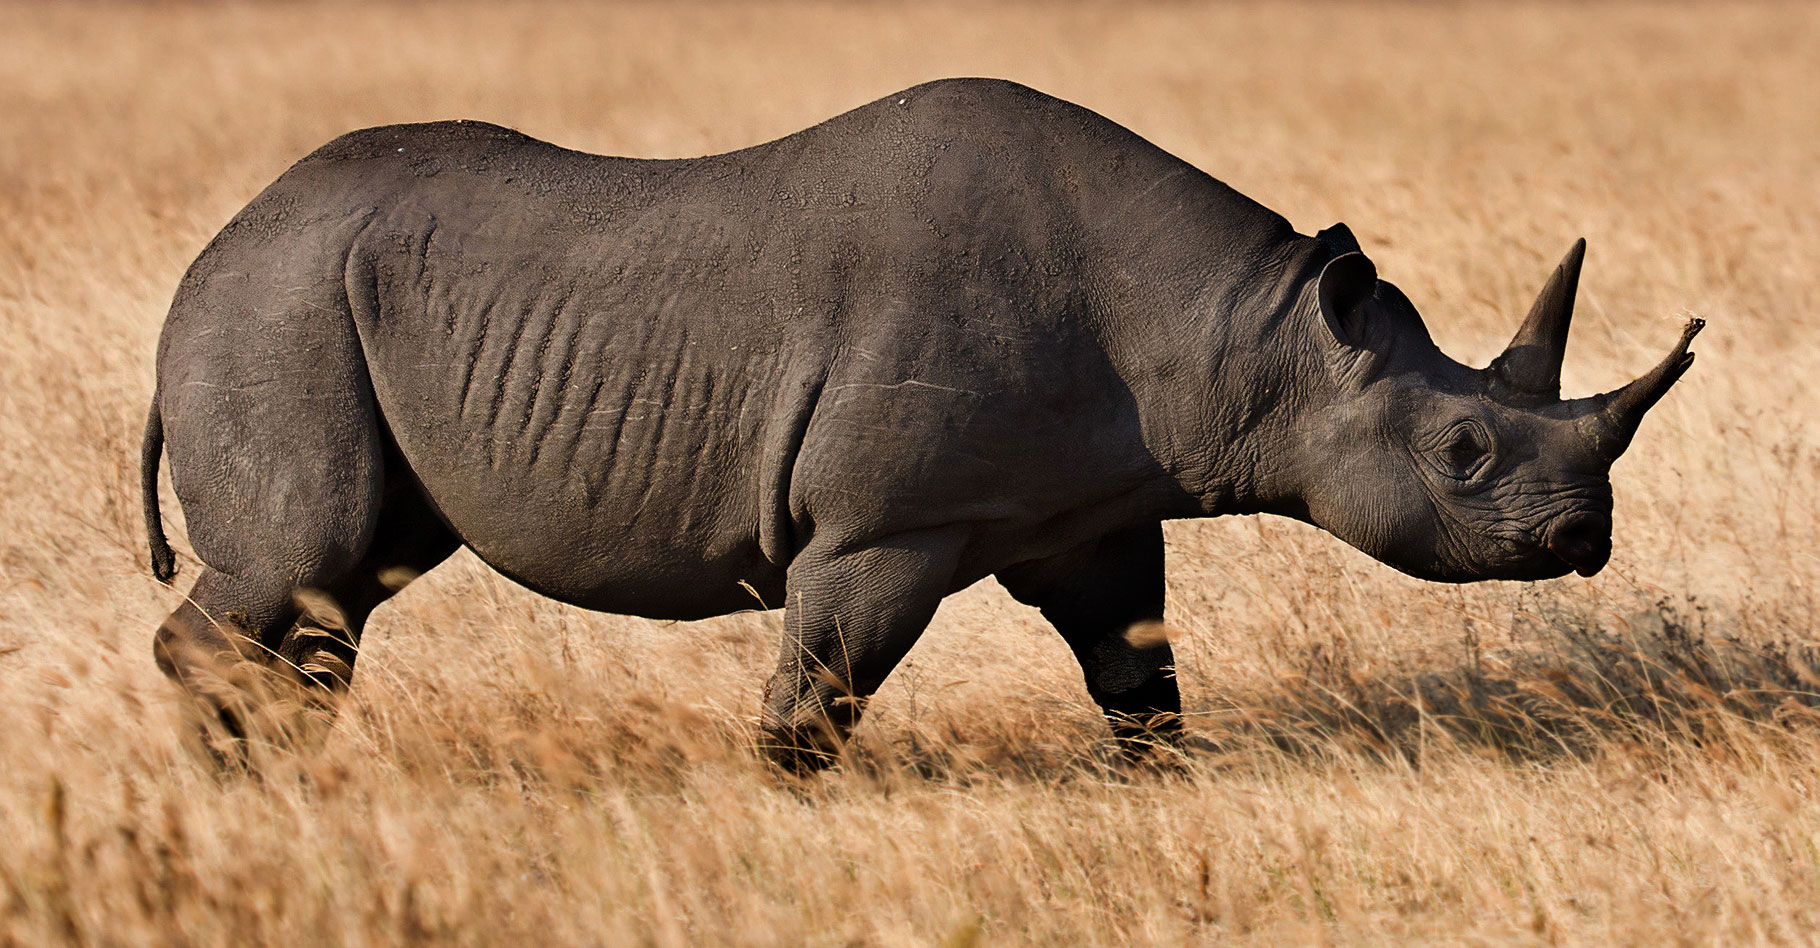 Rhinocéros noir (Diceros bicornis) dans&nbsp;l'aire de conservation du Parc&nbsp;Ngorongoro, Tanzanie.&nbsp;© Ikiwaner,&nbsp;CC by-nc 2.0